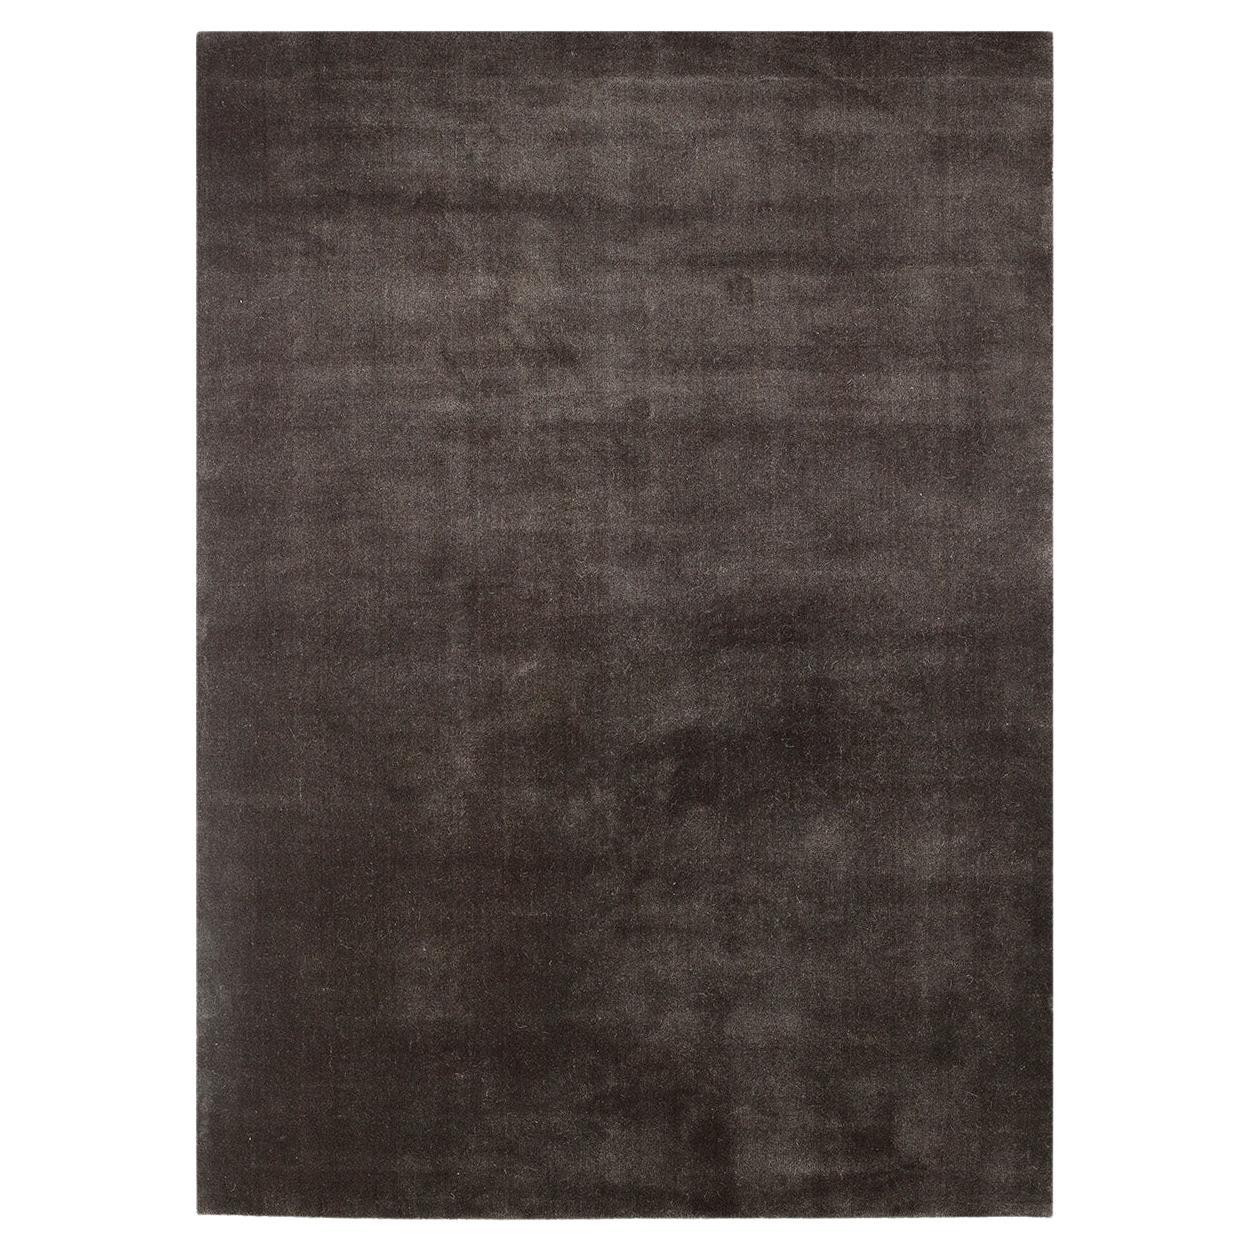 Charcoal Earth Carpet by Massimo Copenhagen